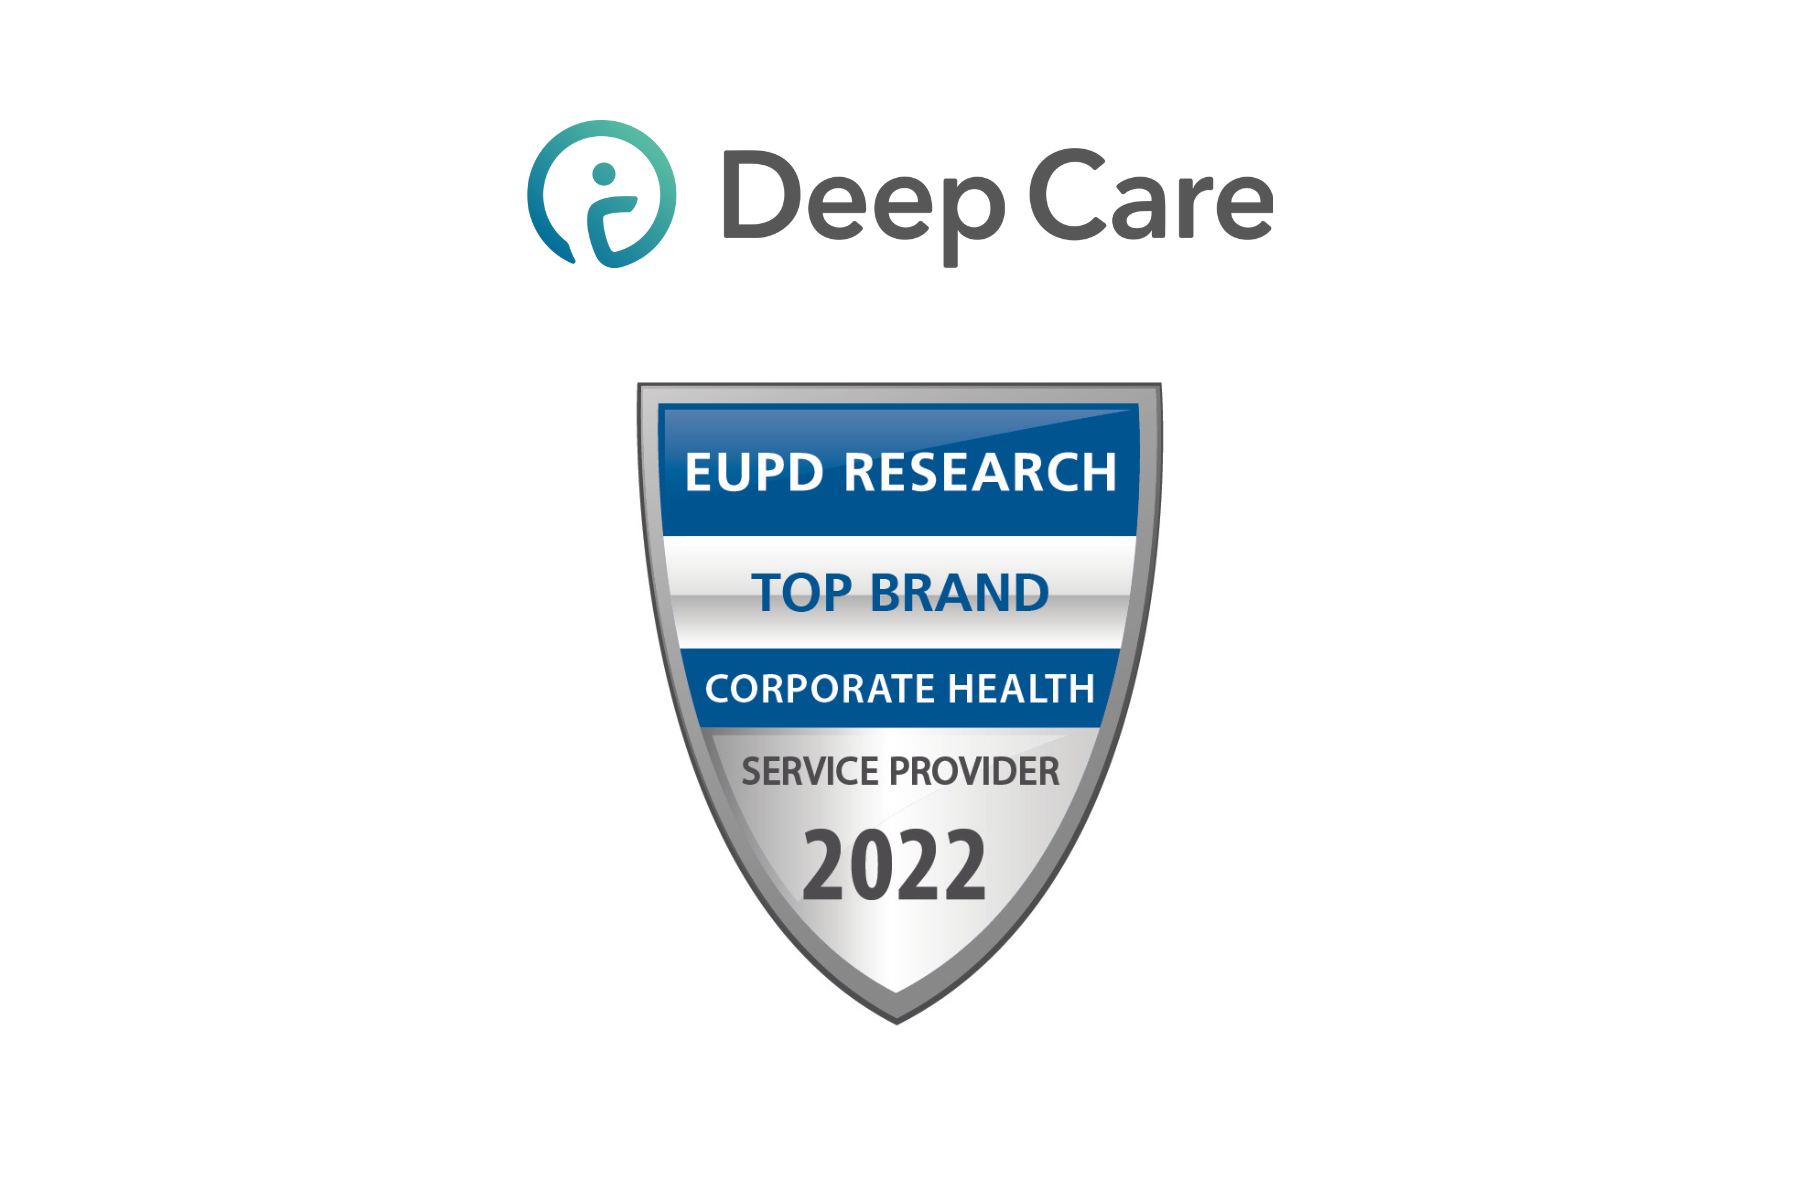 Deep Care Logo und EUPD Research Top Brand 2022 Badge